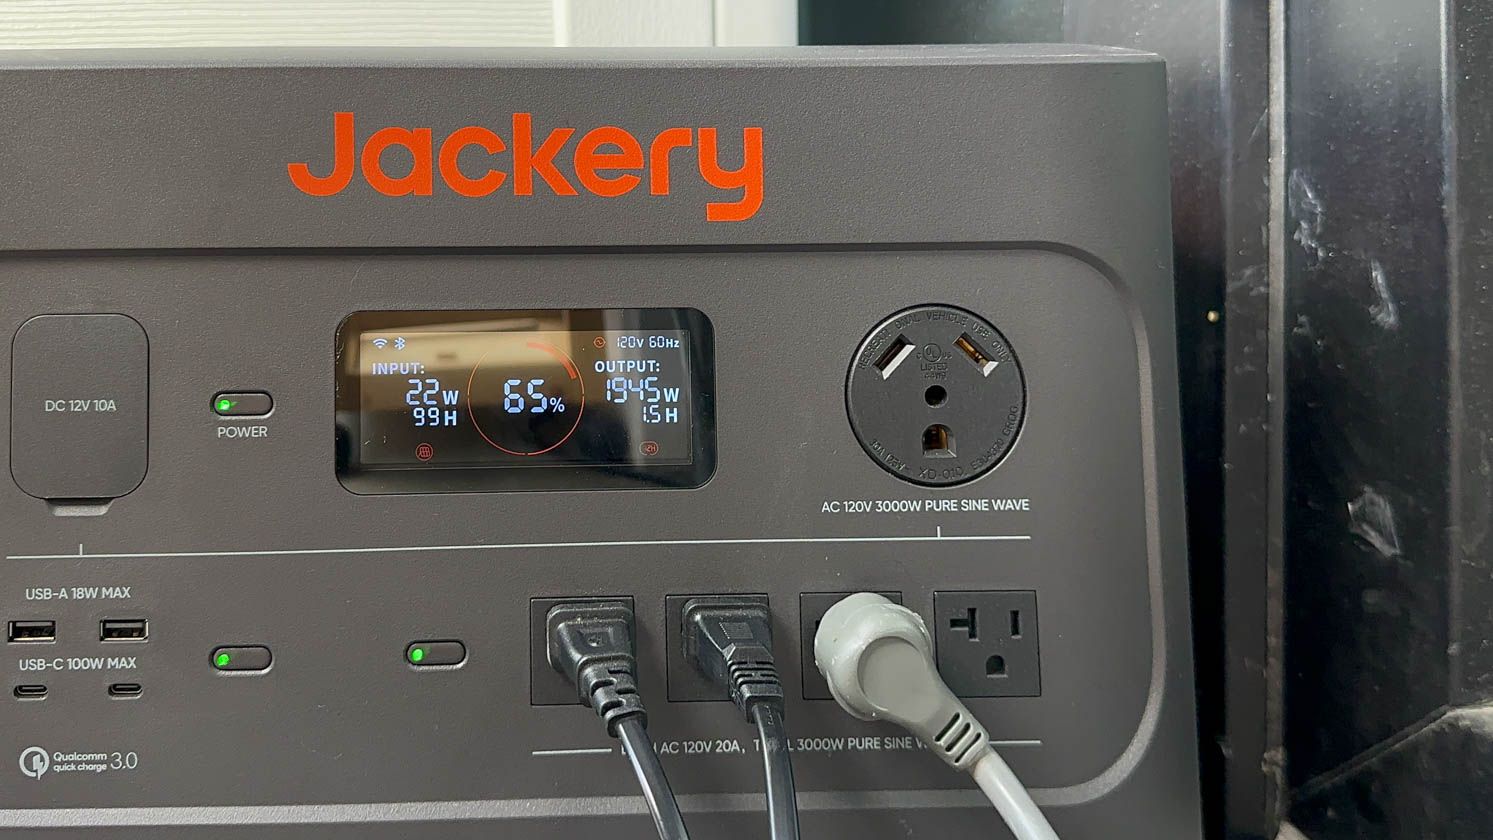 Jackery 3000-Watt Output/6000W Peak Portable Power Station